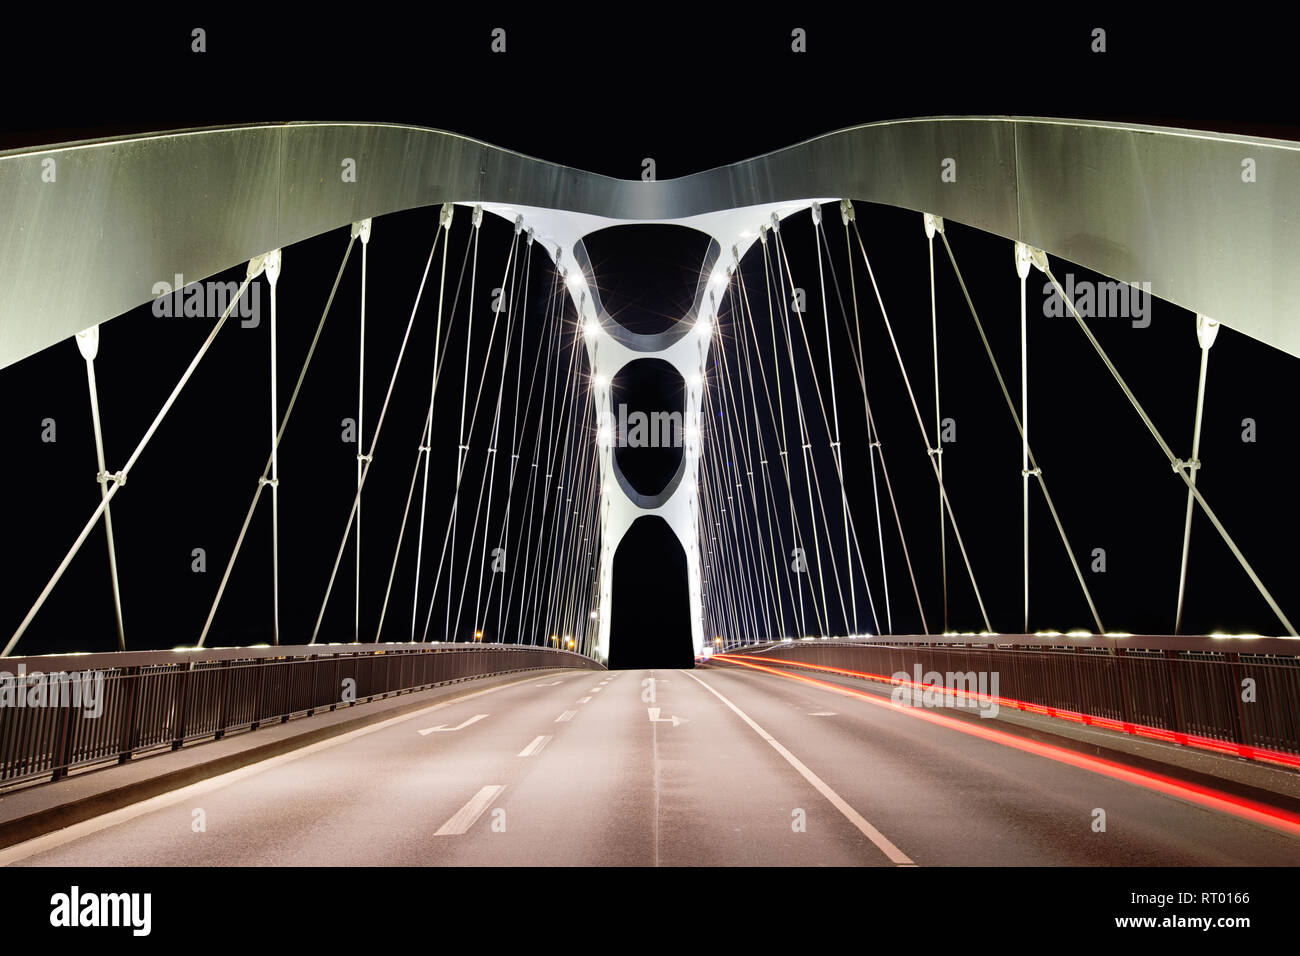 Europe Germany Hessen Main Honsel bridge at night East Harbour Bridge Frankfurt / Main Stock Photo